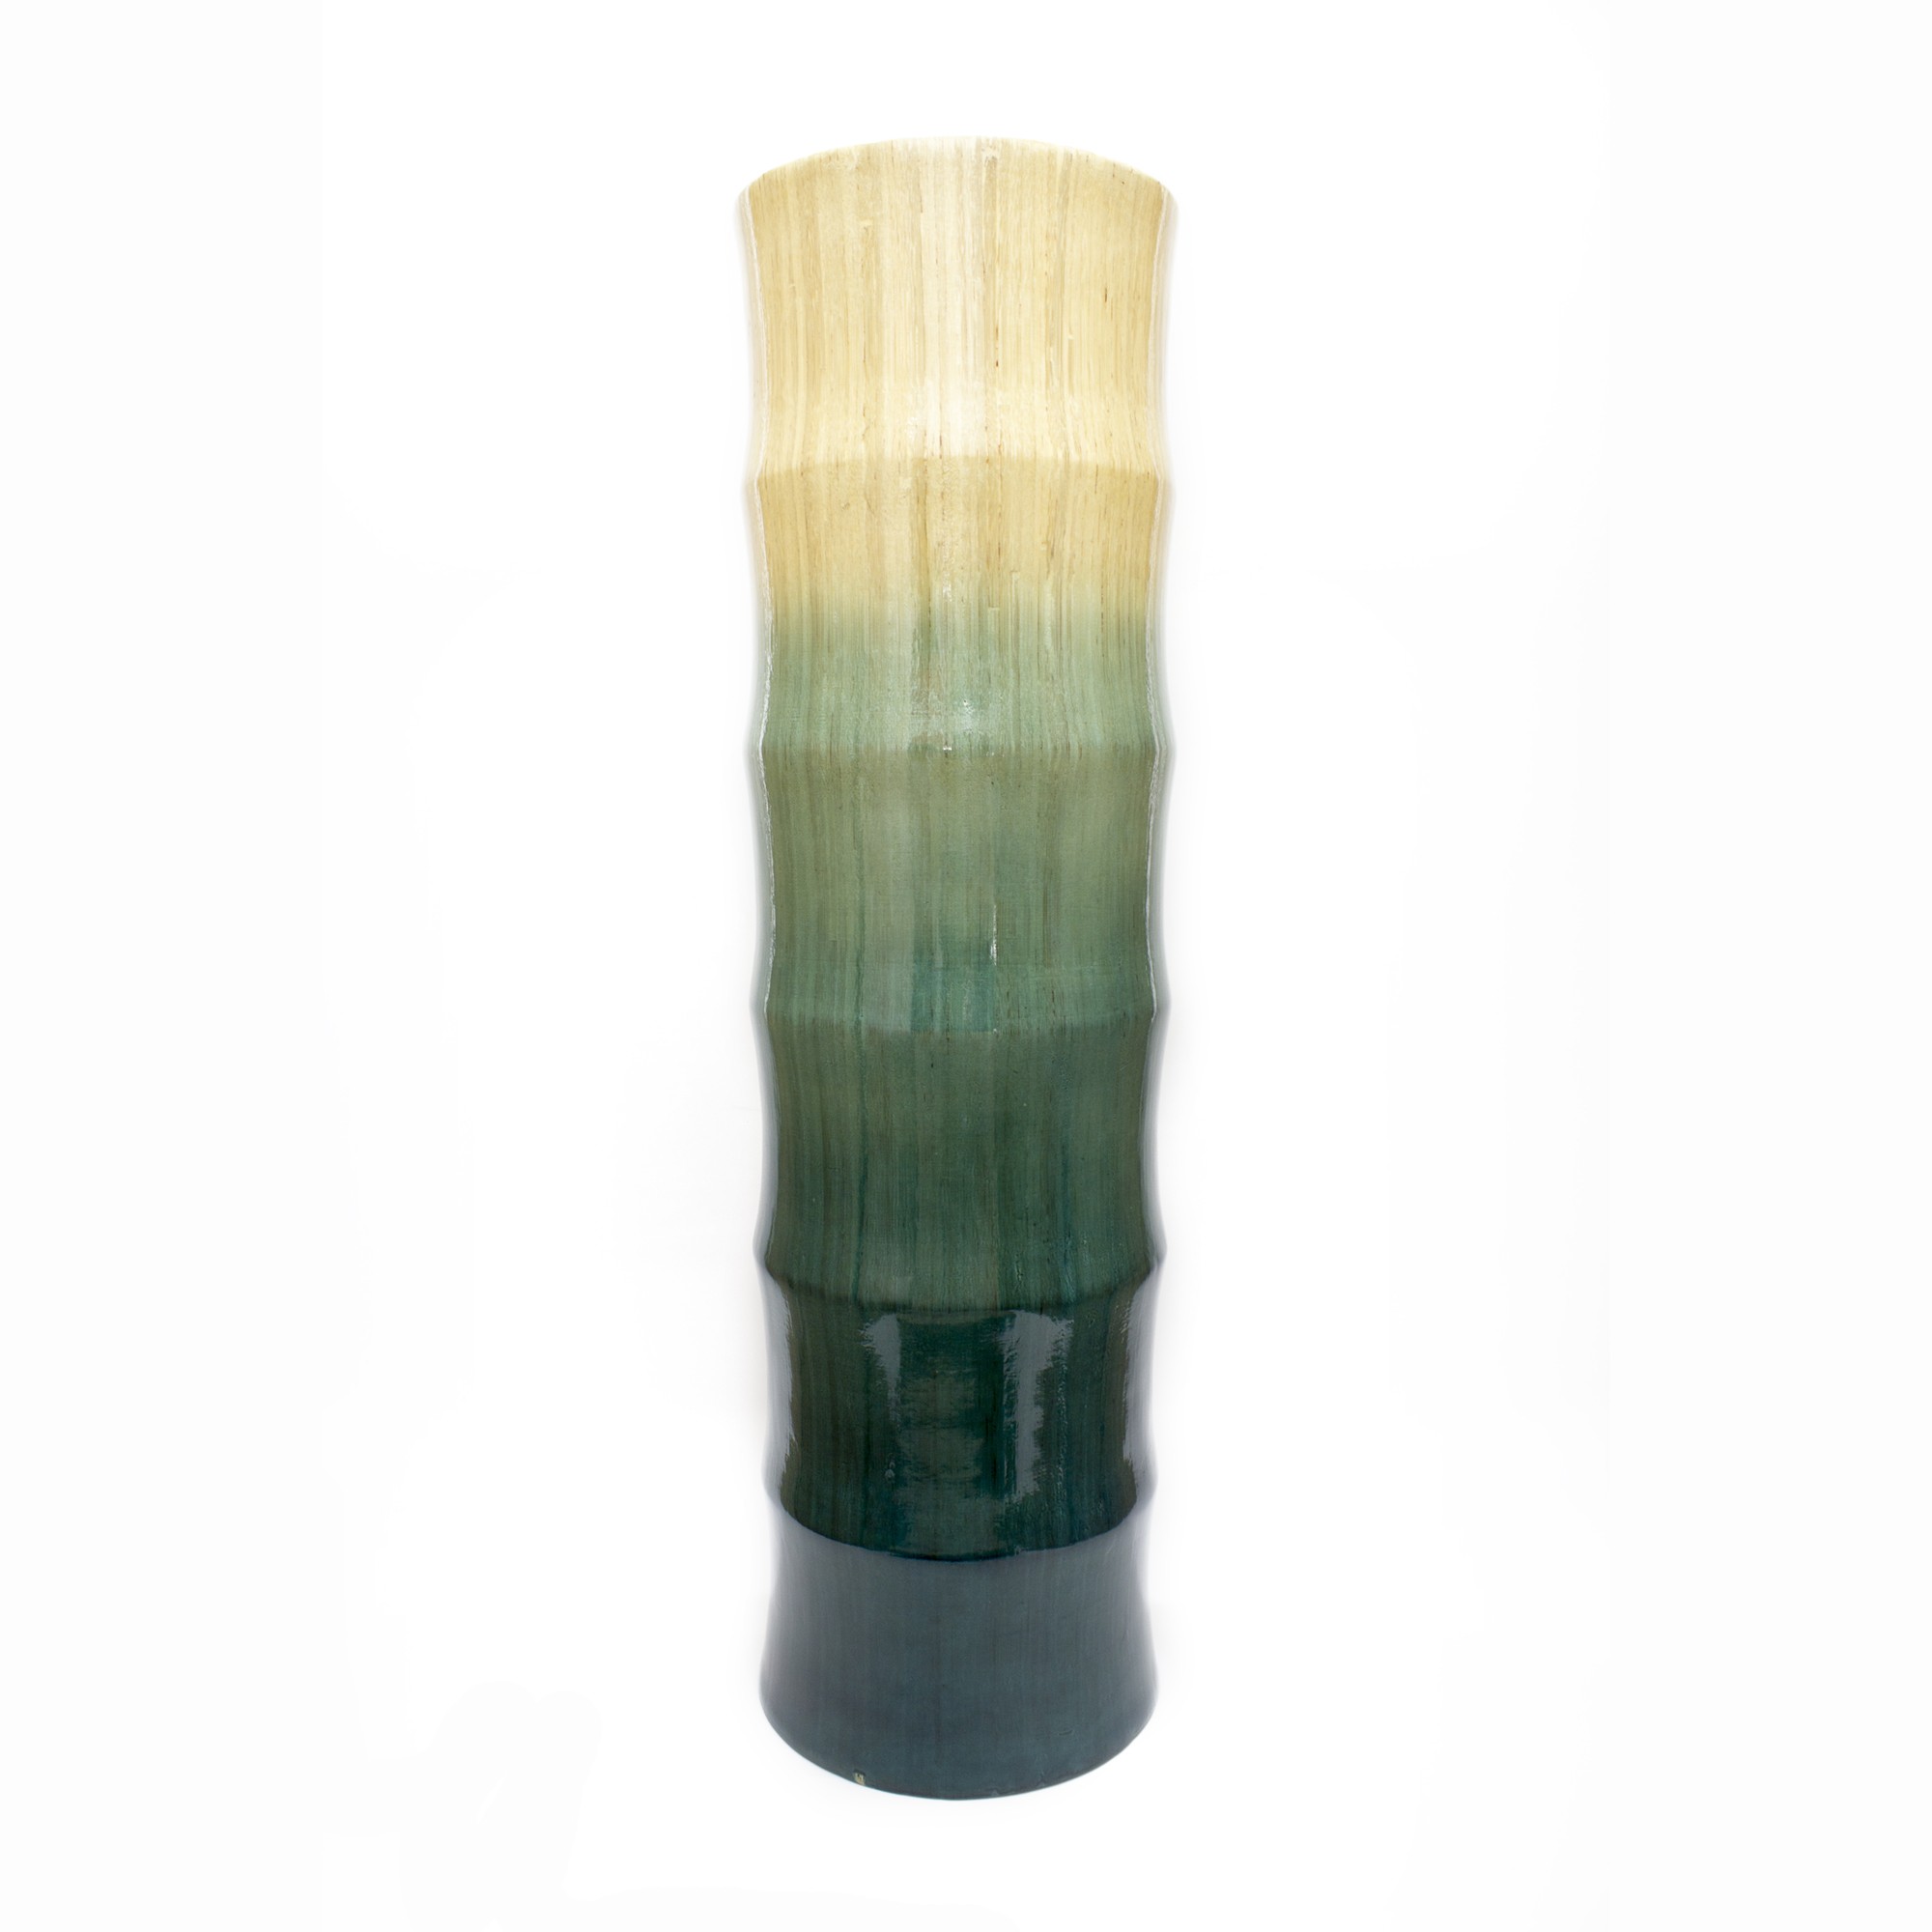 7" X 7" X 24" Multi Color Bamboo Chute Vase